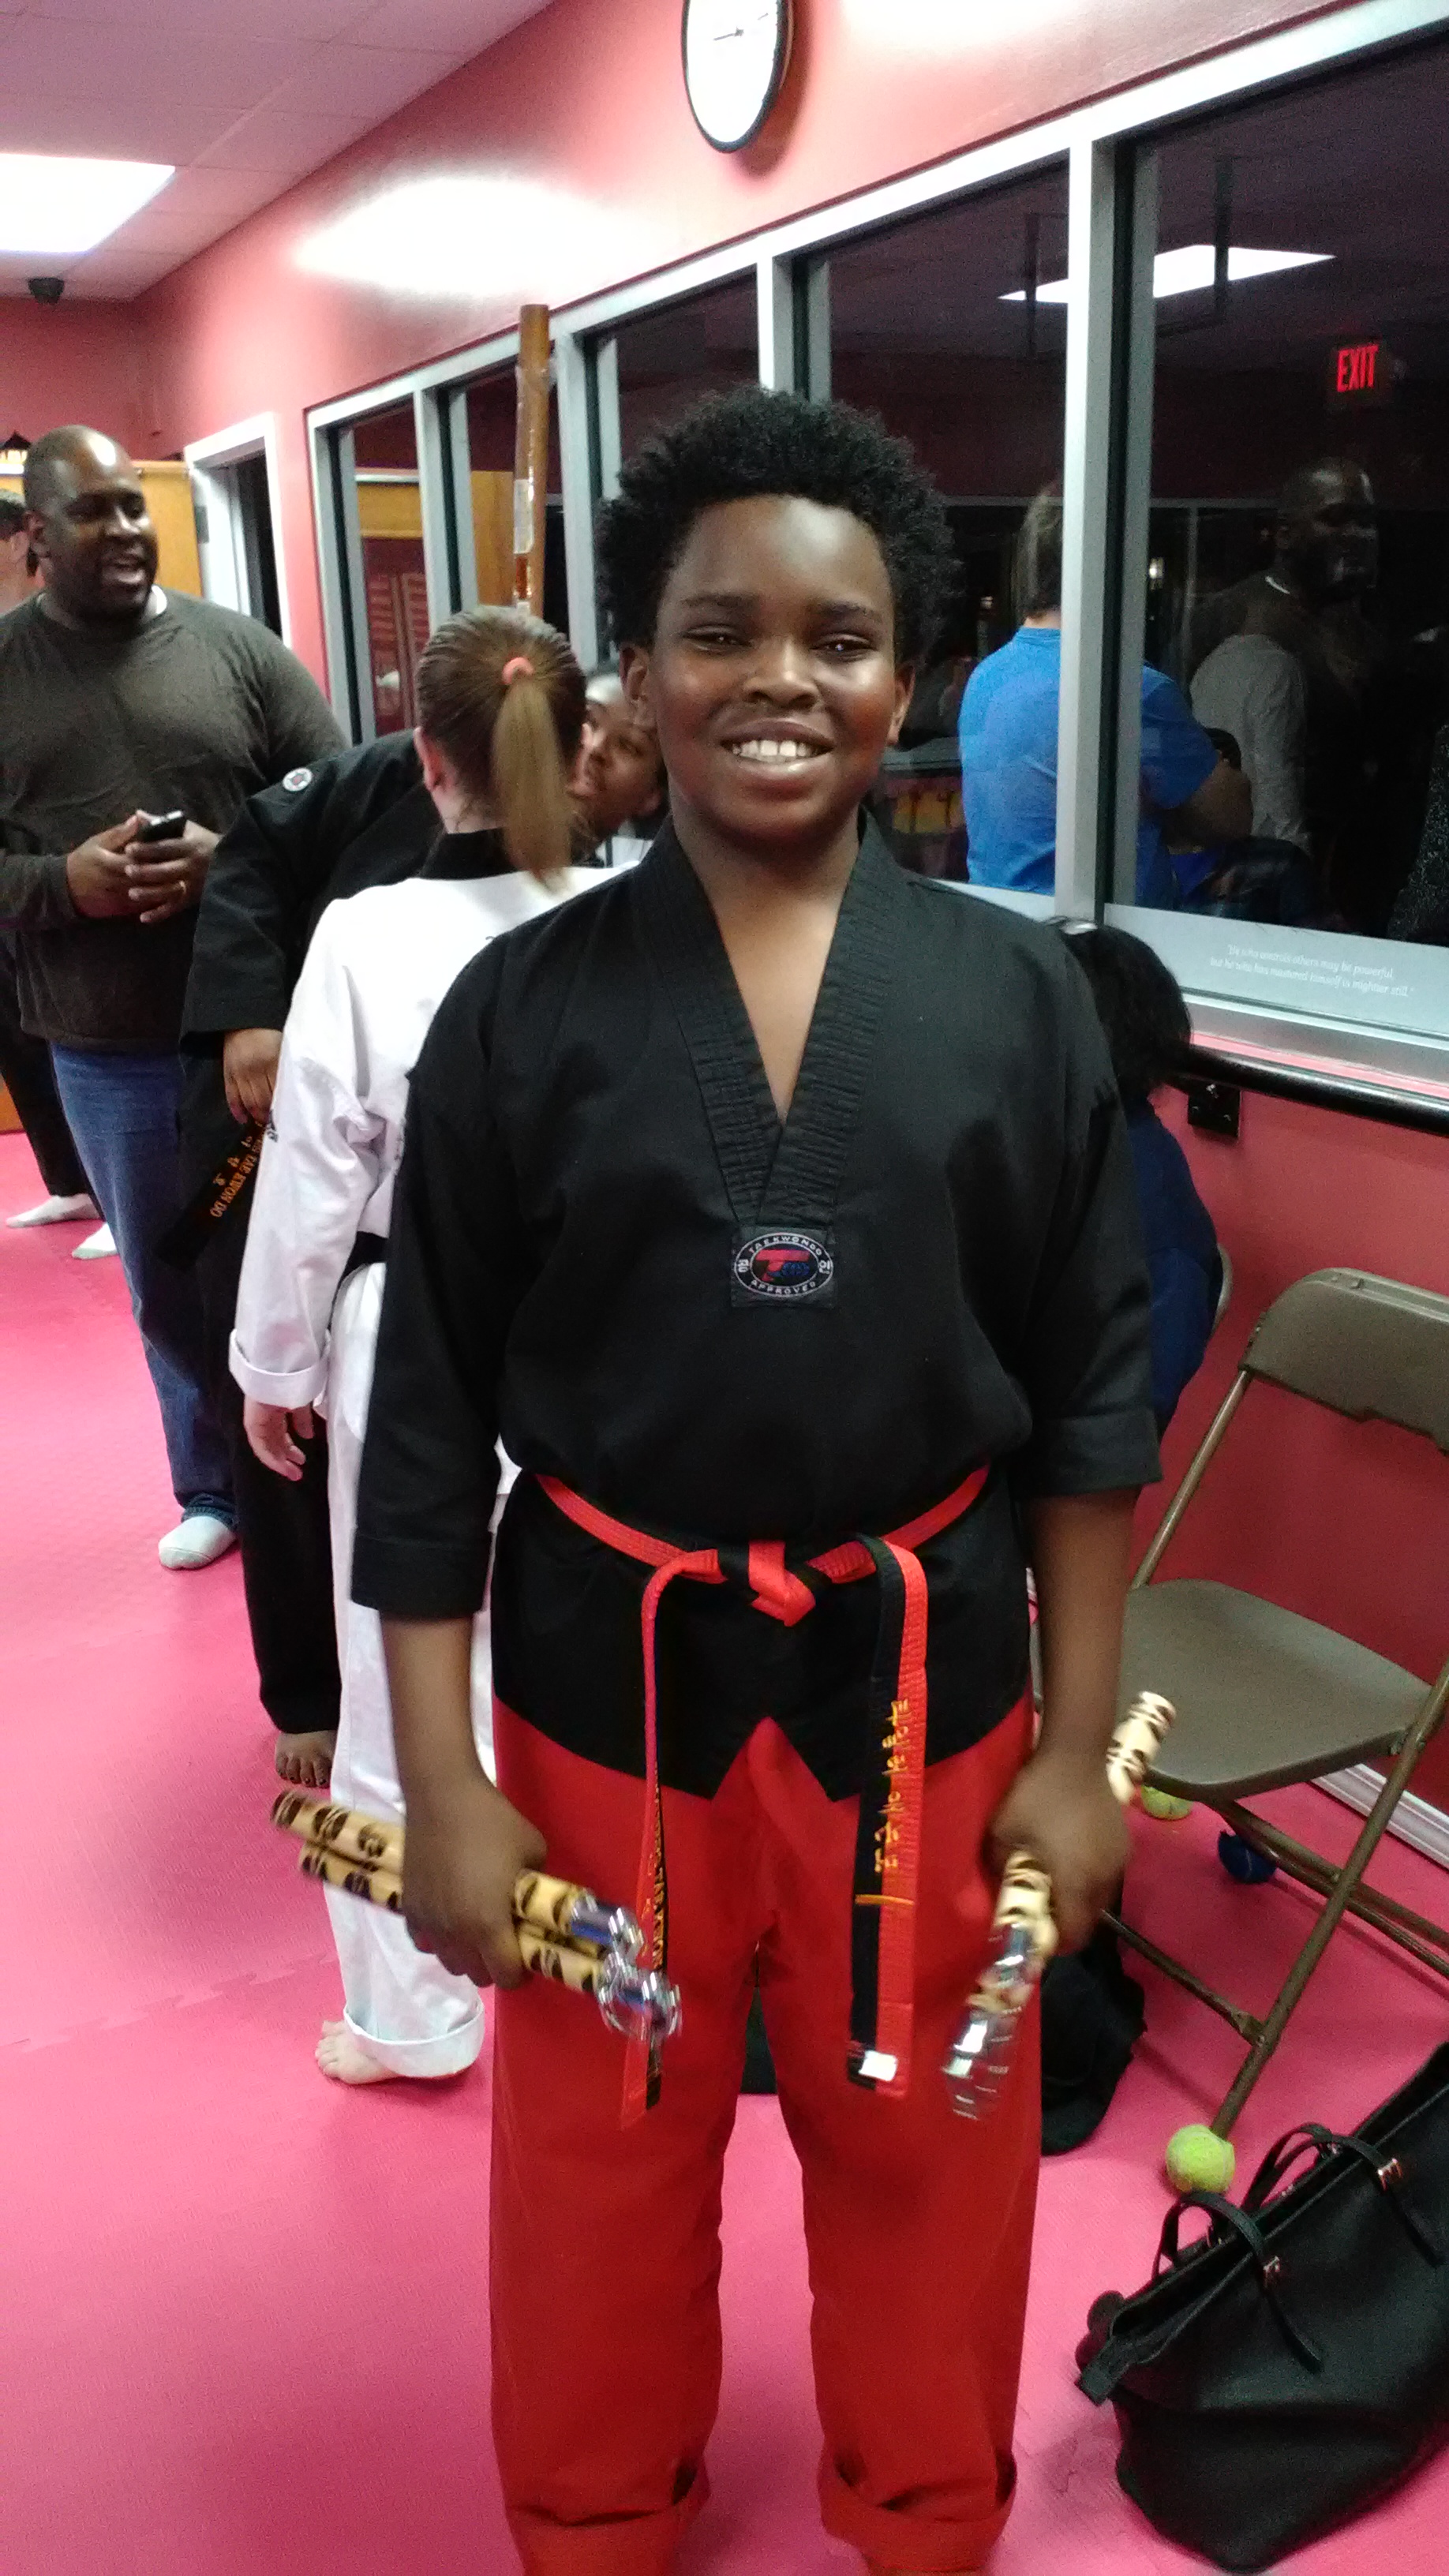 Quest Student receives 1st Dahn Black Belt